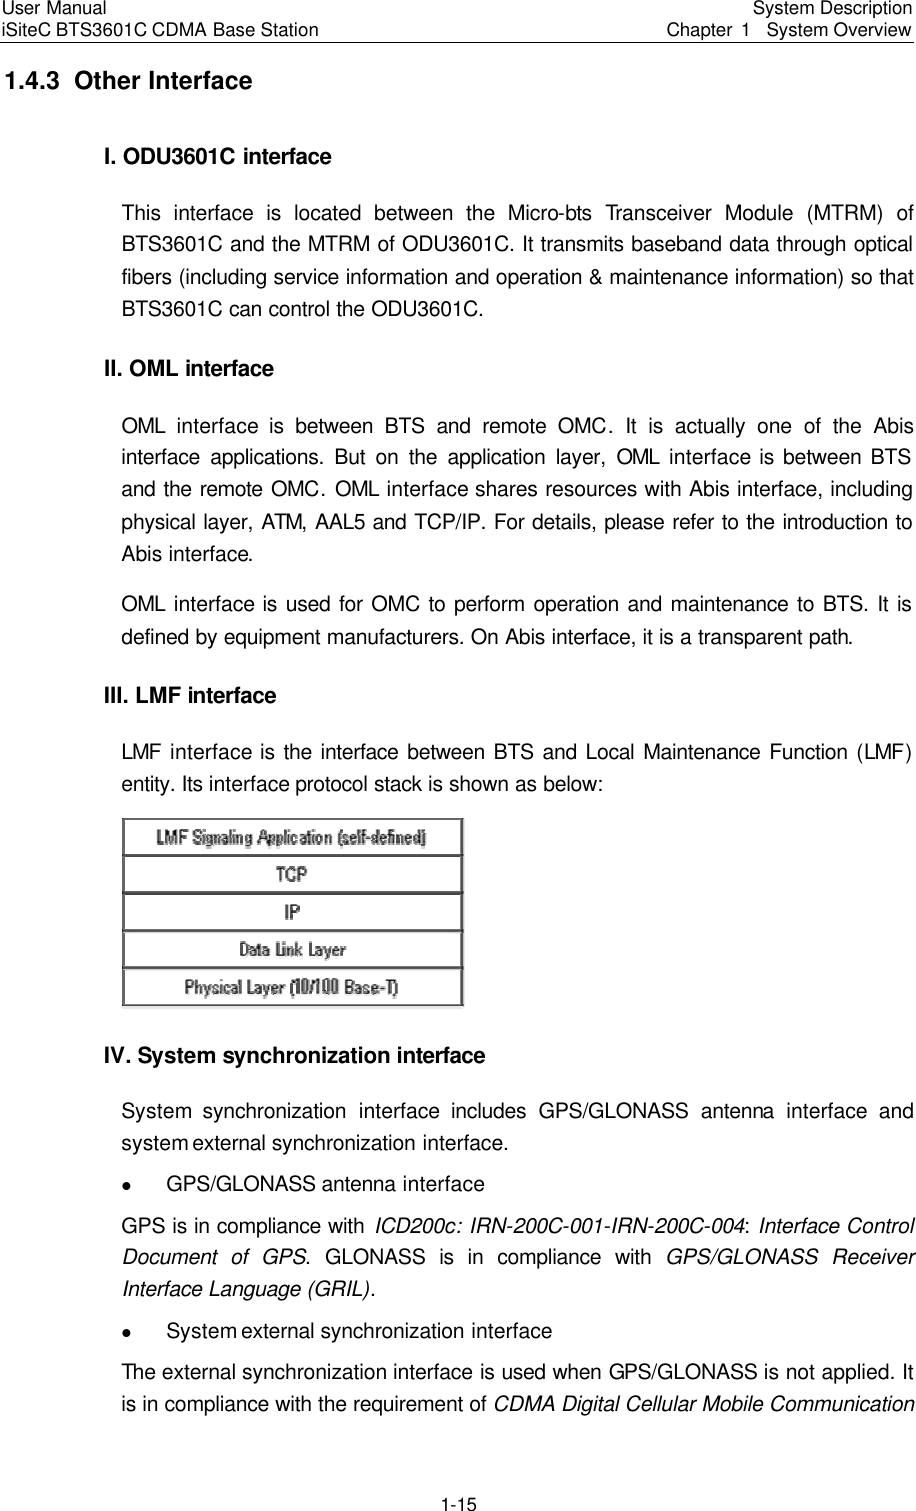 Page 18 of Huawei Technologies BTS3601C-800 CDMA Base Station User Manual 3